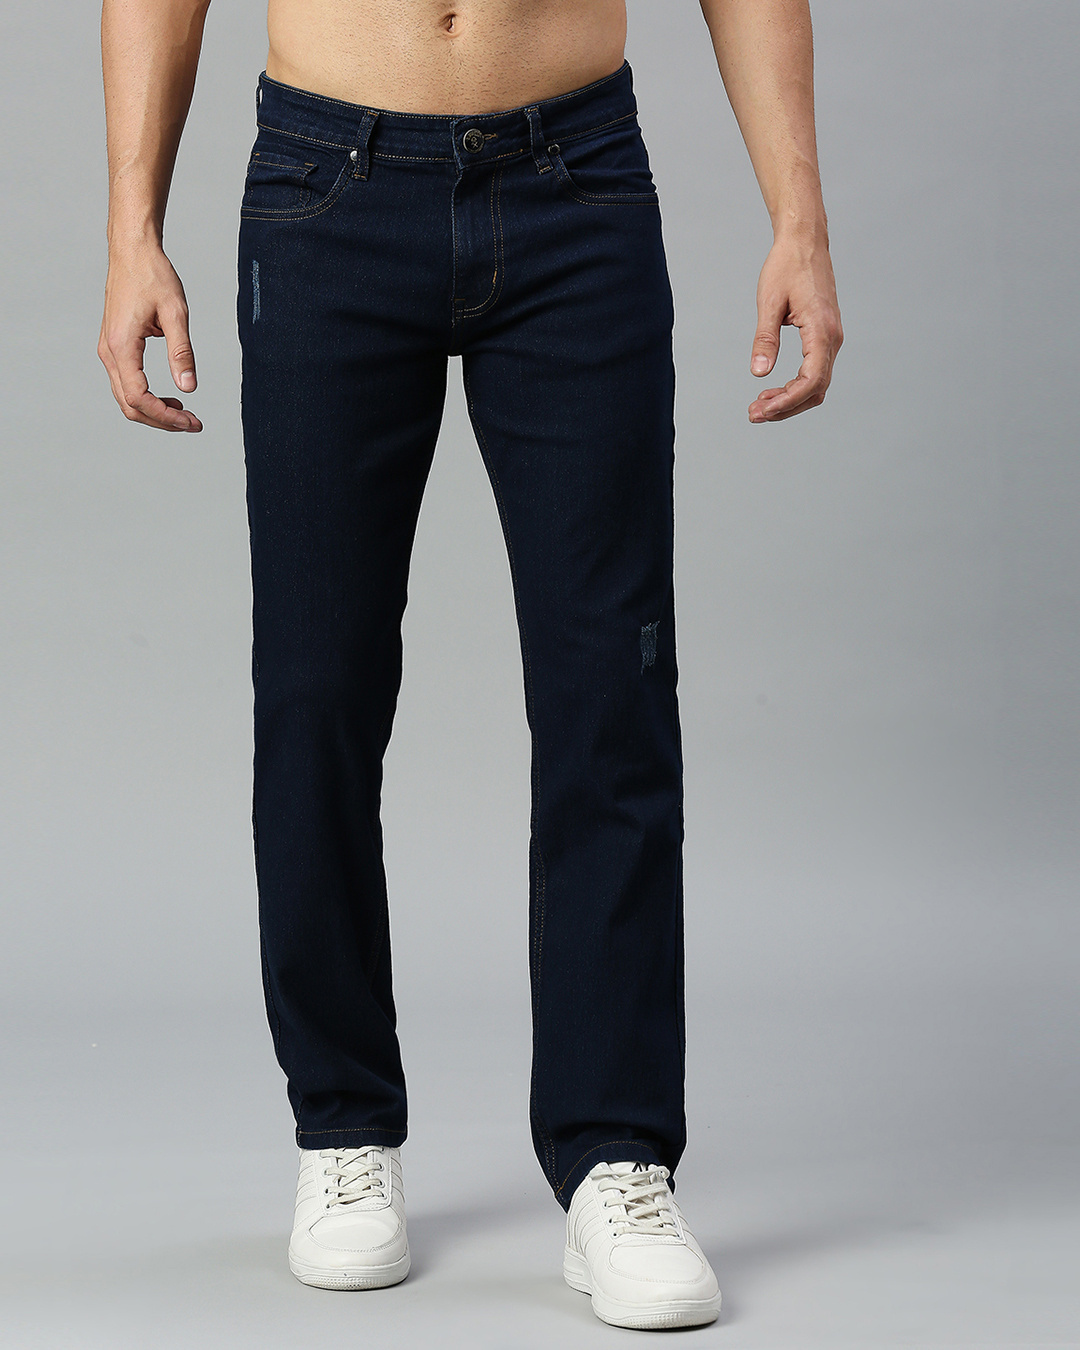 Buy Men's Blue Distressed Jeans Online at Bewakoof